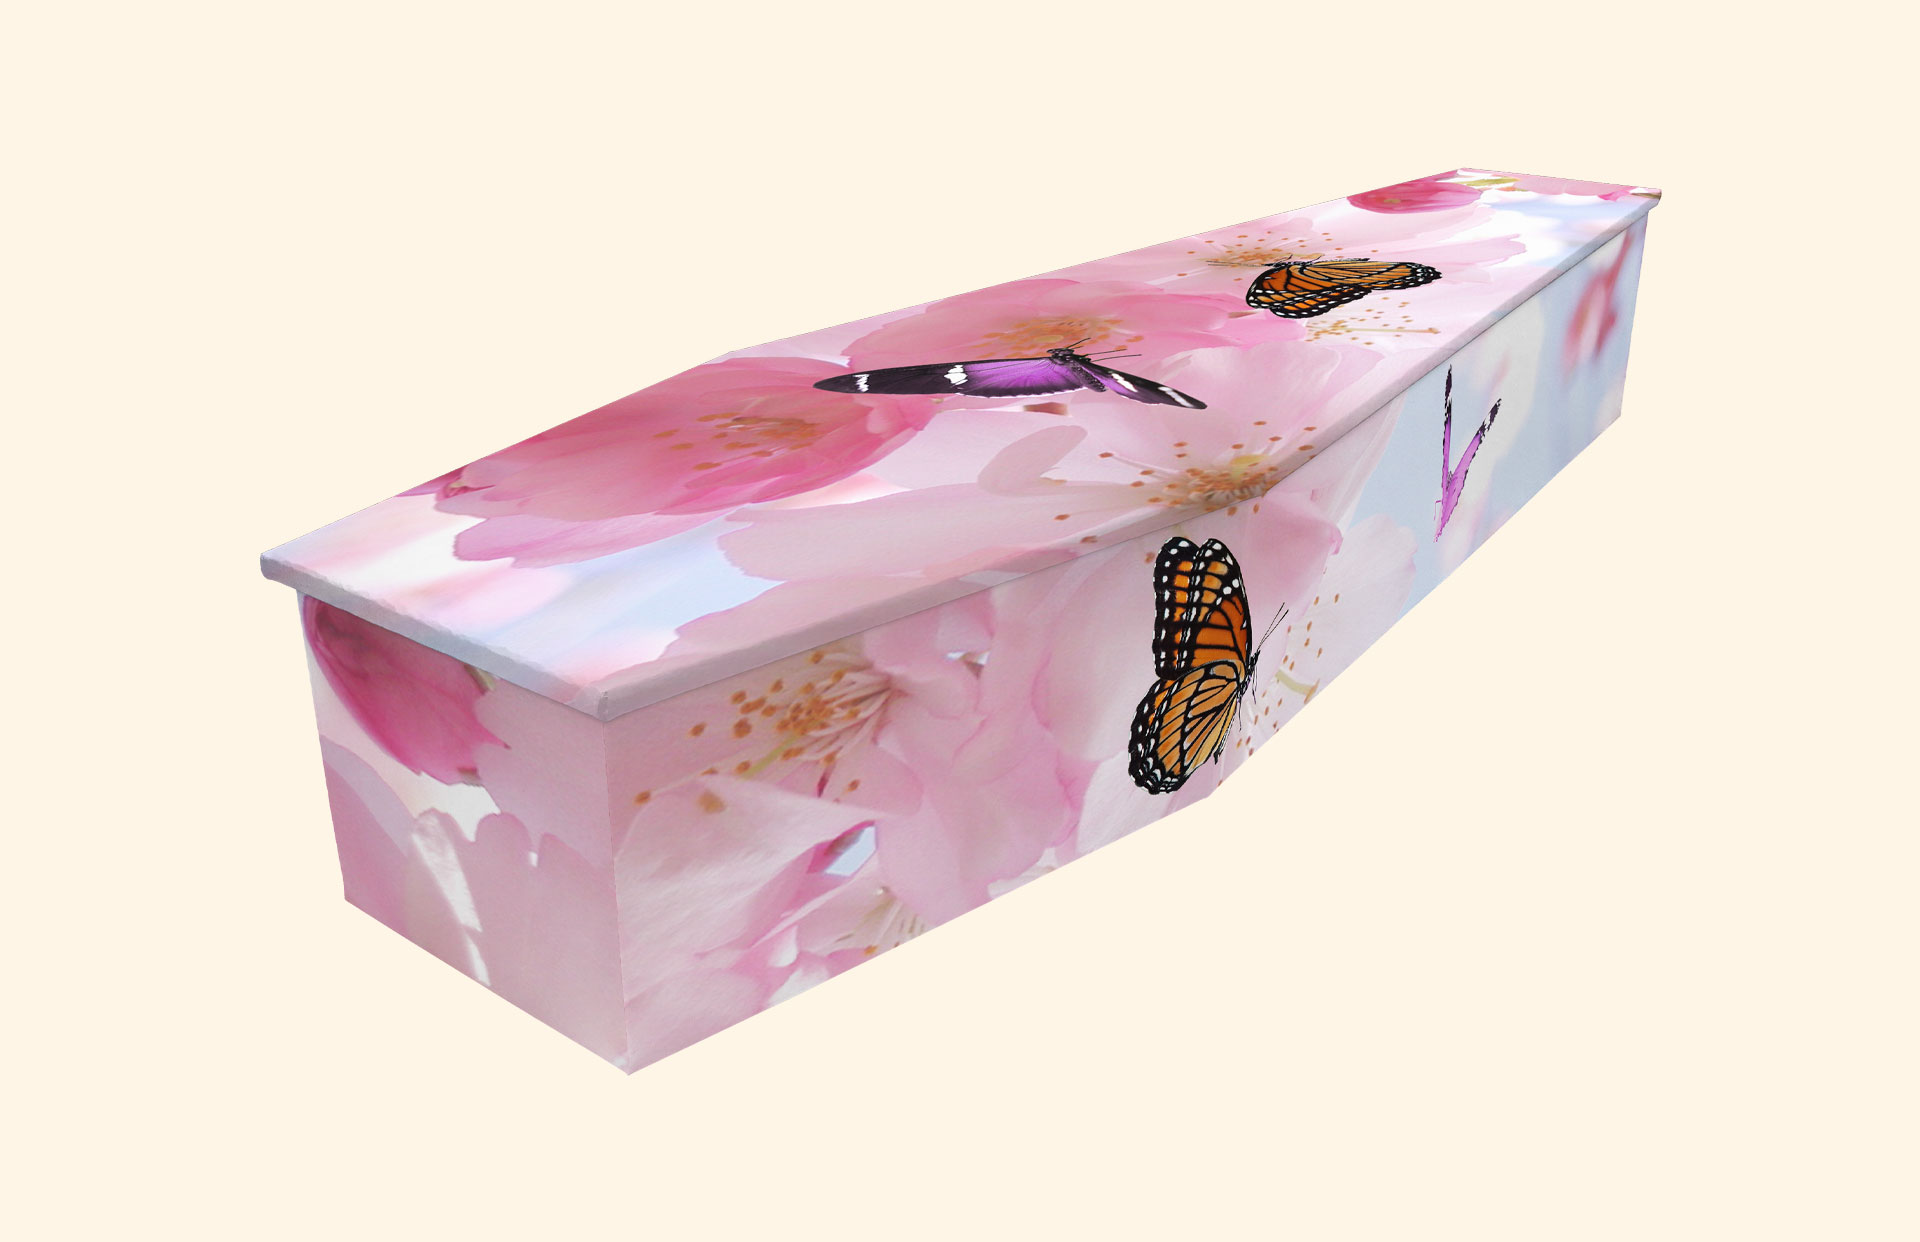 Grace design on a cardboard coffin